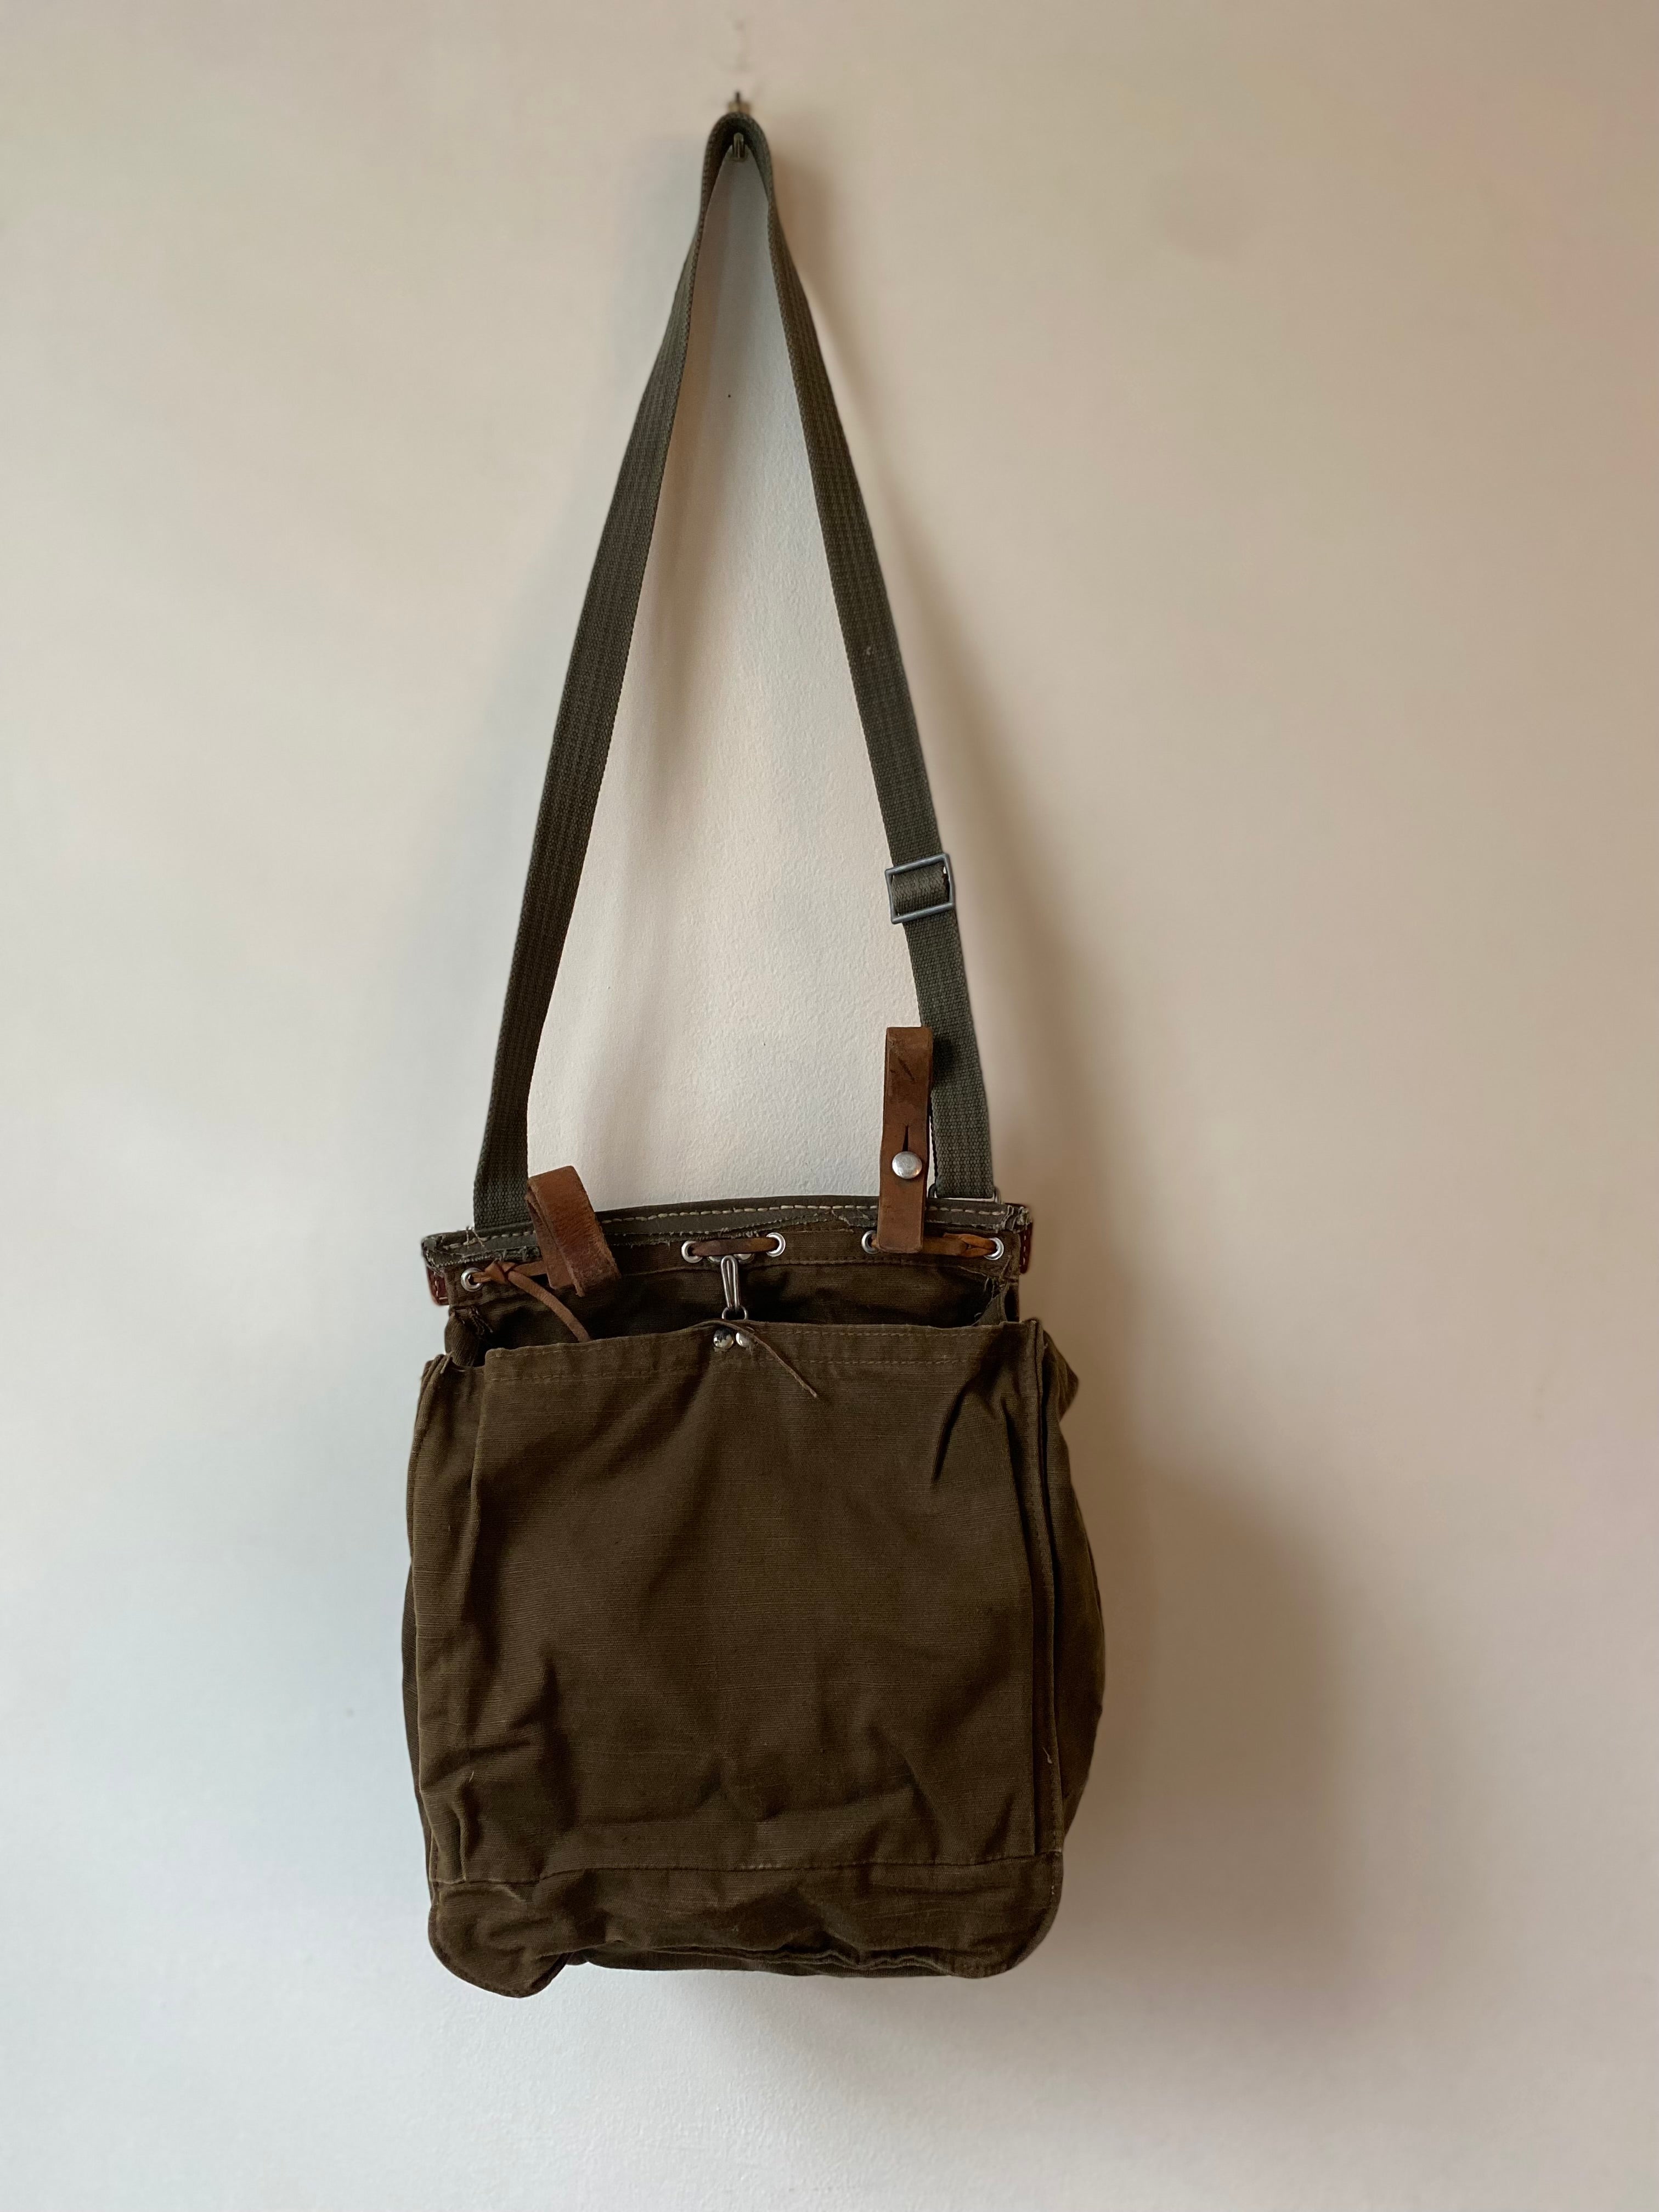 Generic Fishing Sling Bag Fishing Tackle Storage Bag Tool Bag For